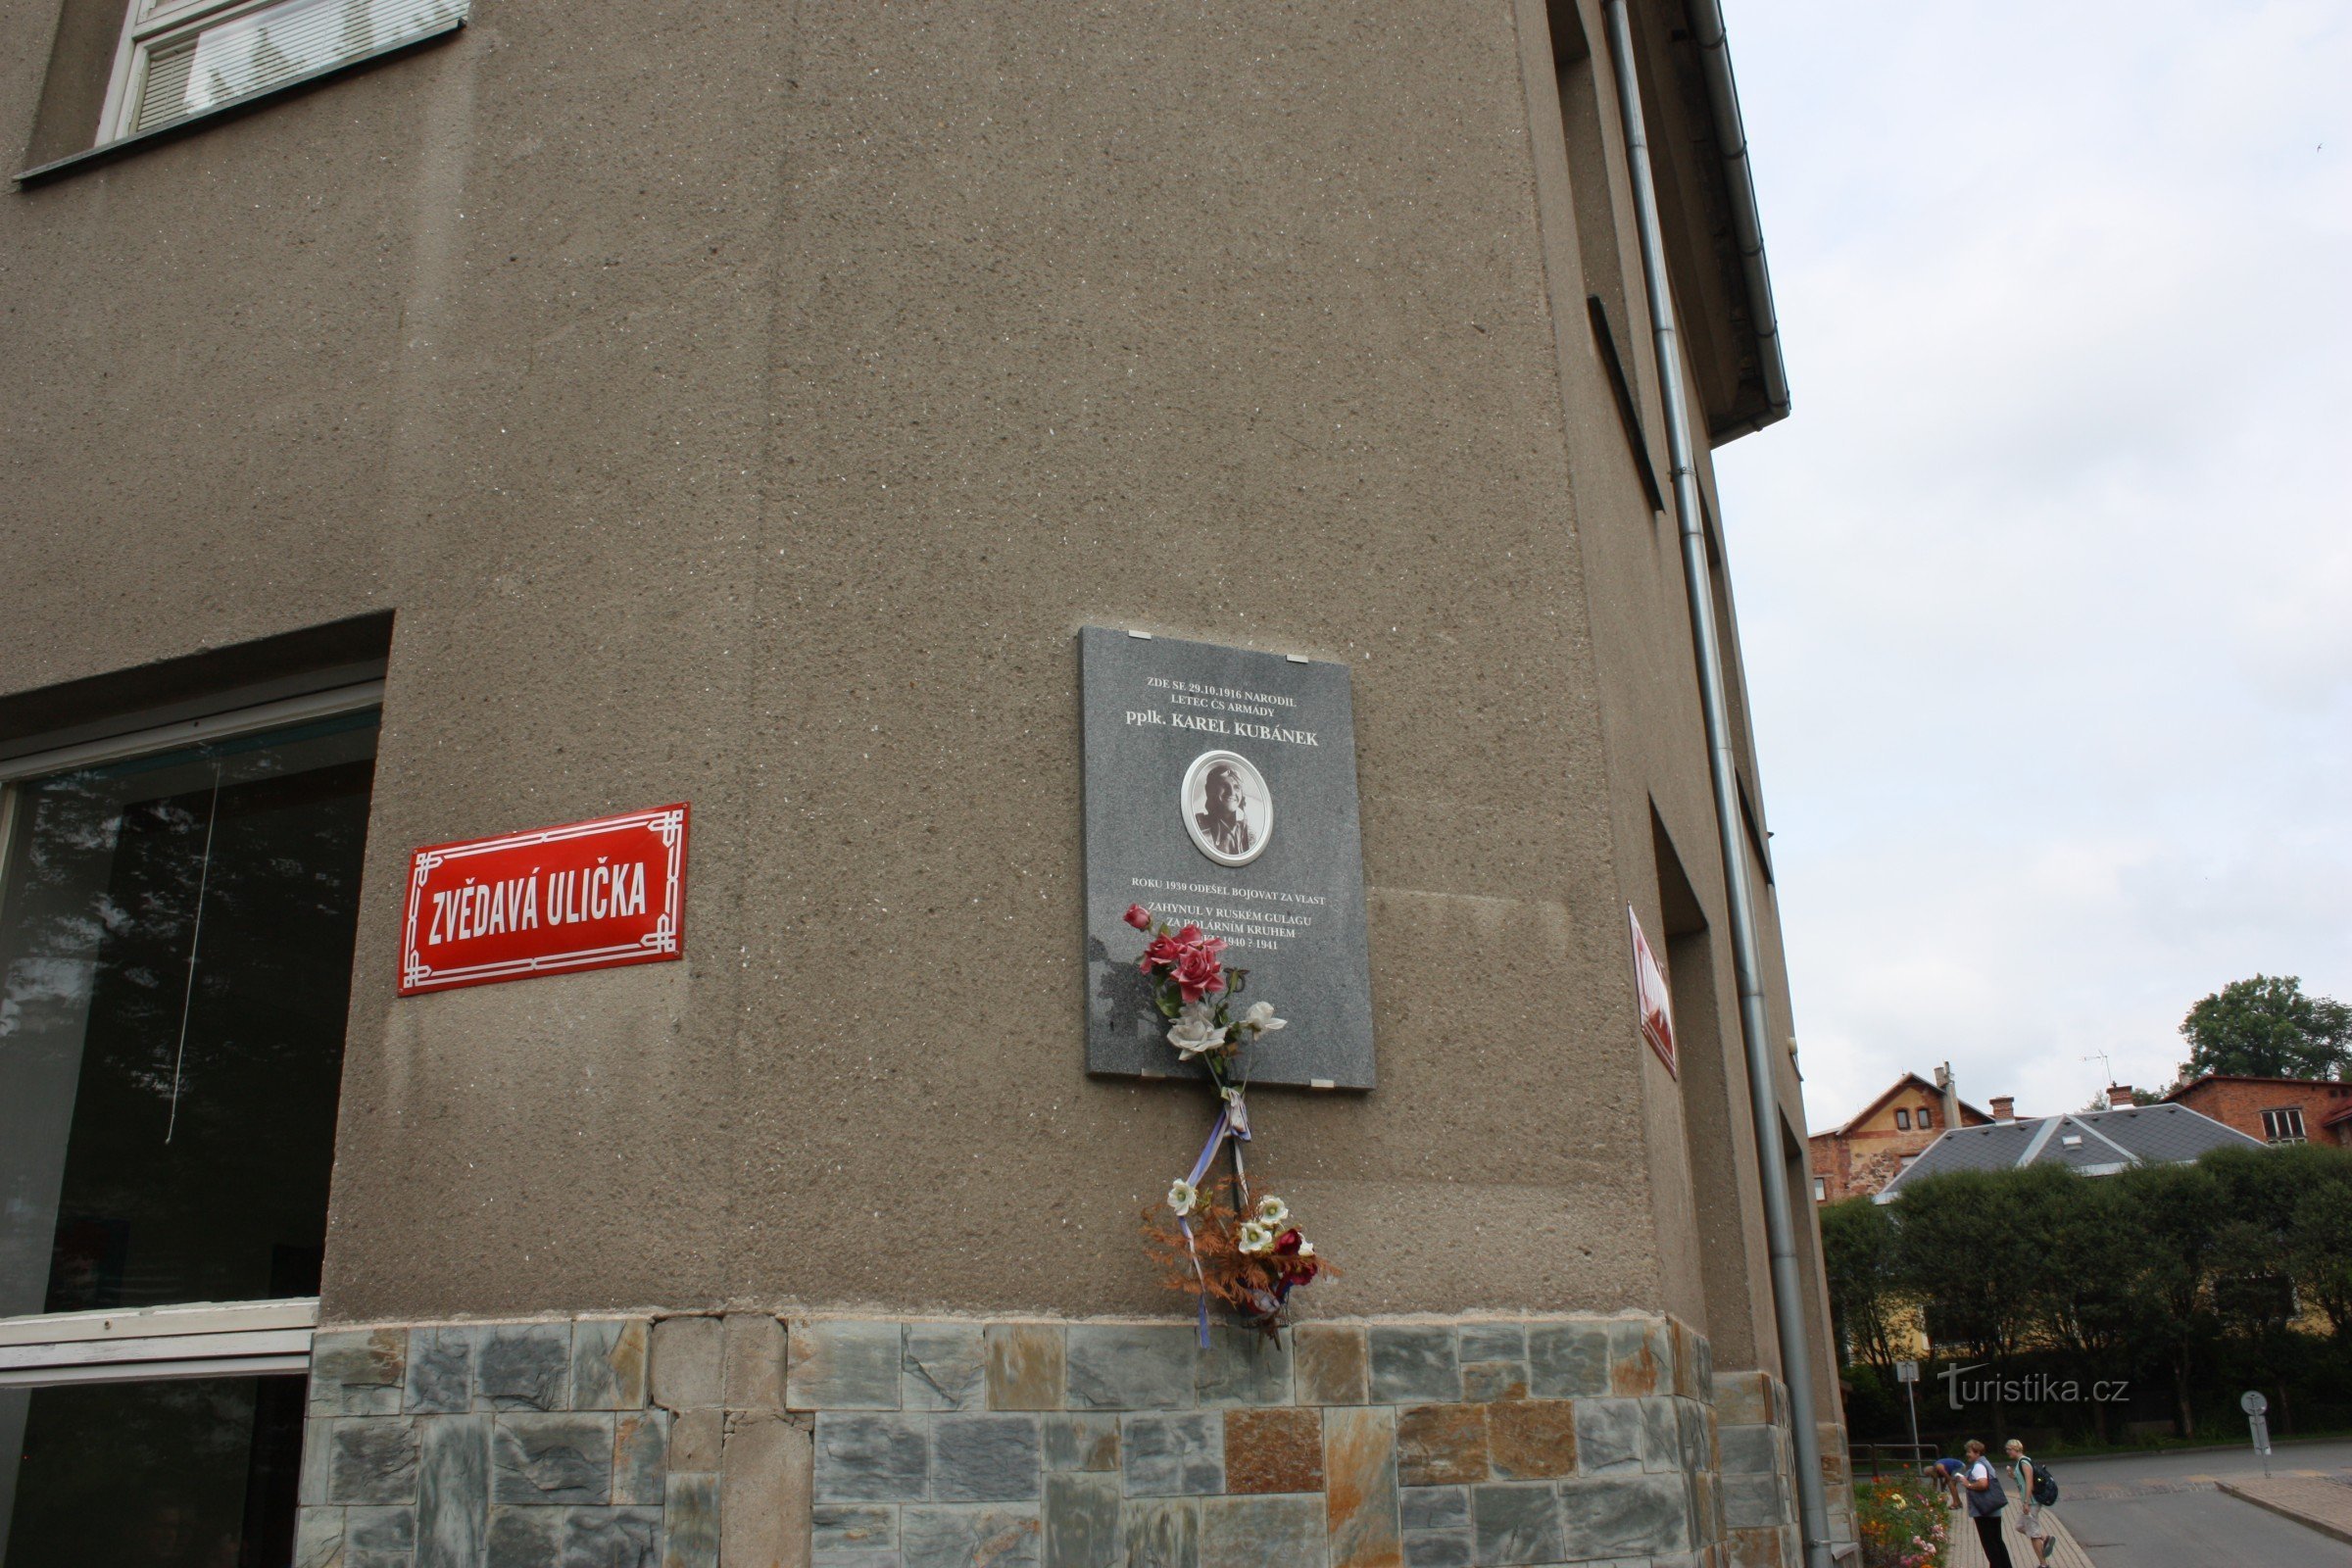 Gedenkplaat op de hoek van Zvědavá ulička in Jilemnice